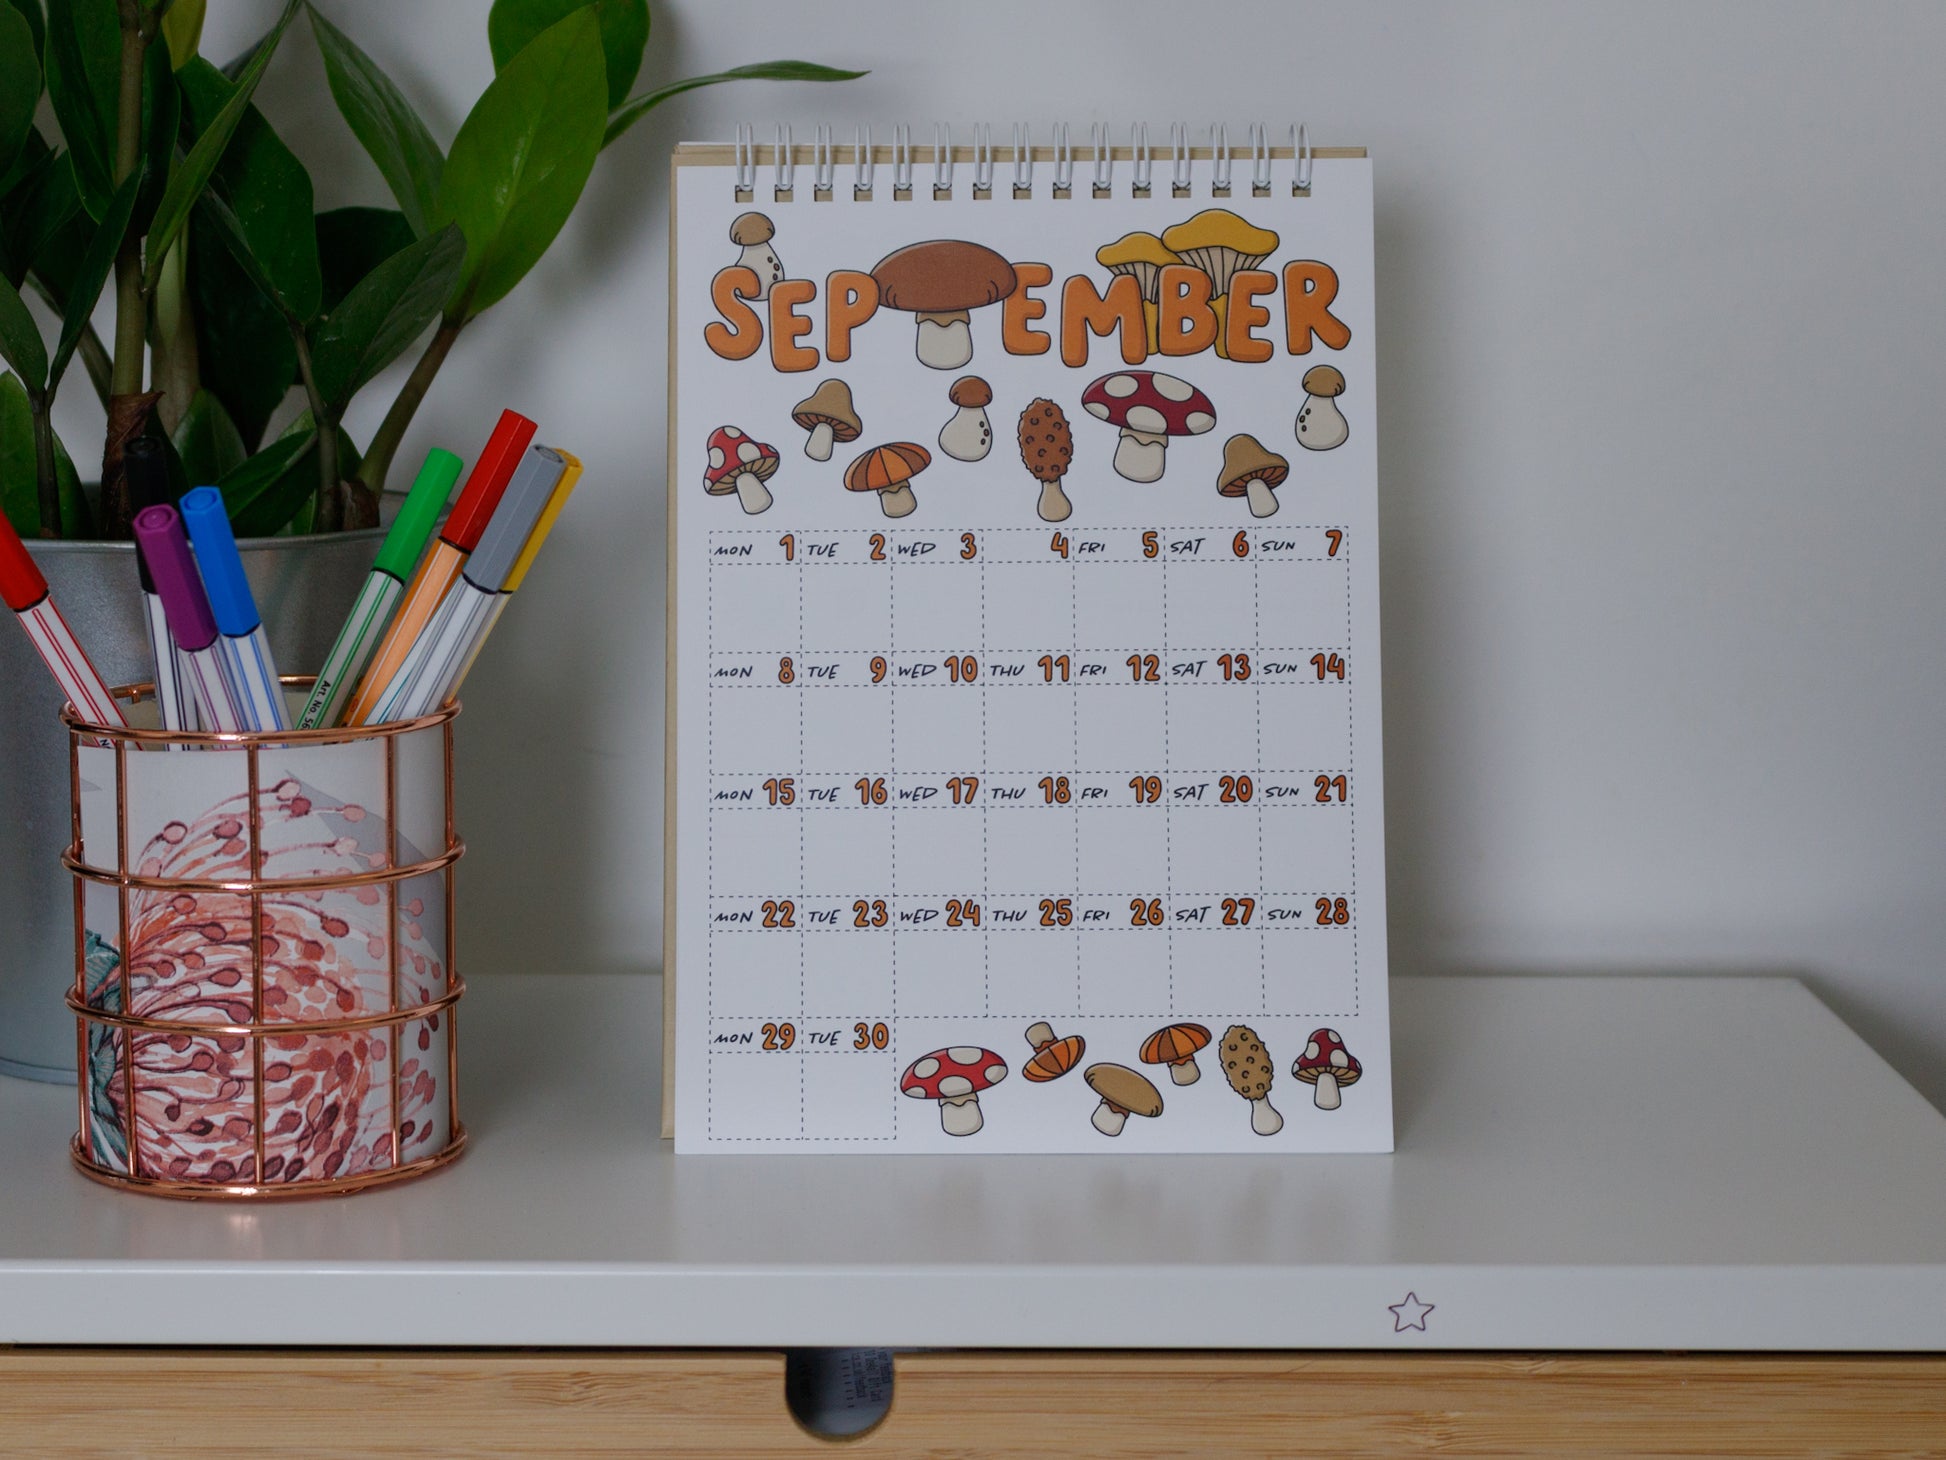 2025 Colourful Desk Calendars - September with Mushroom Design